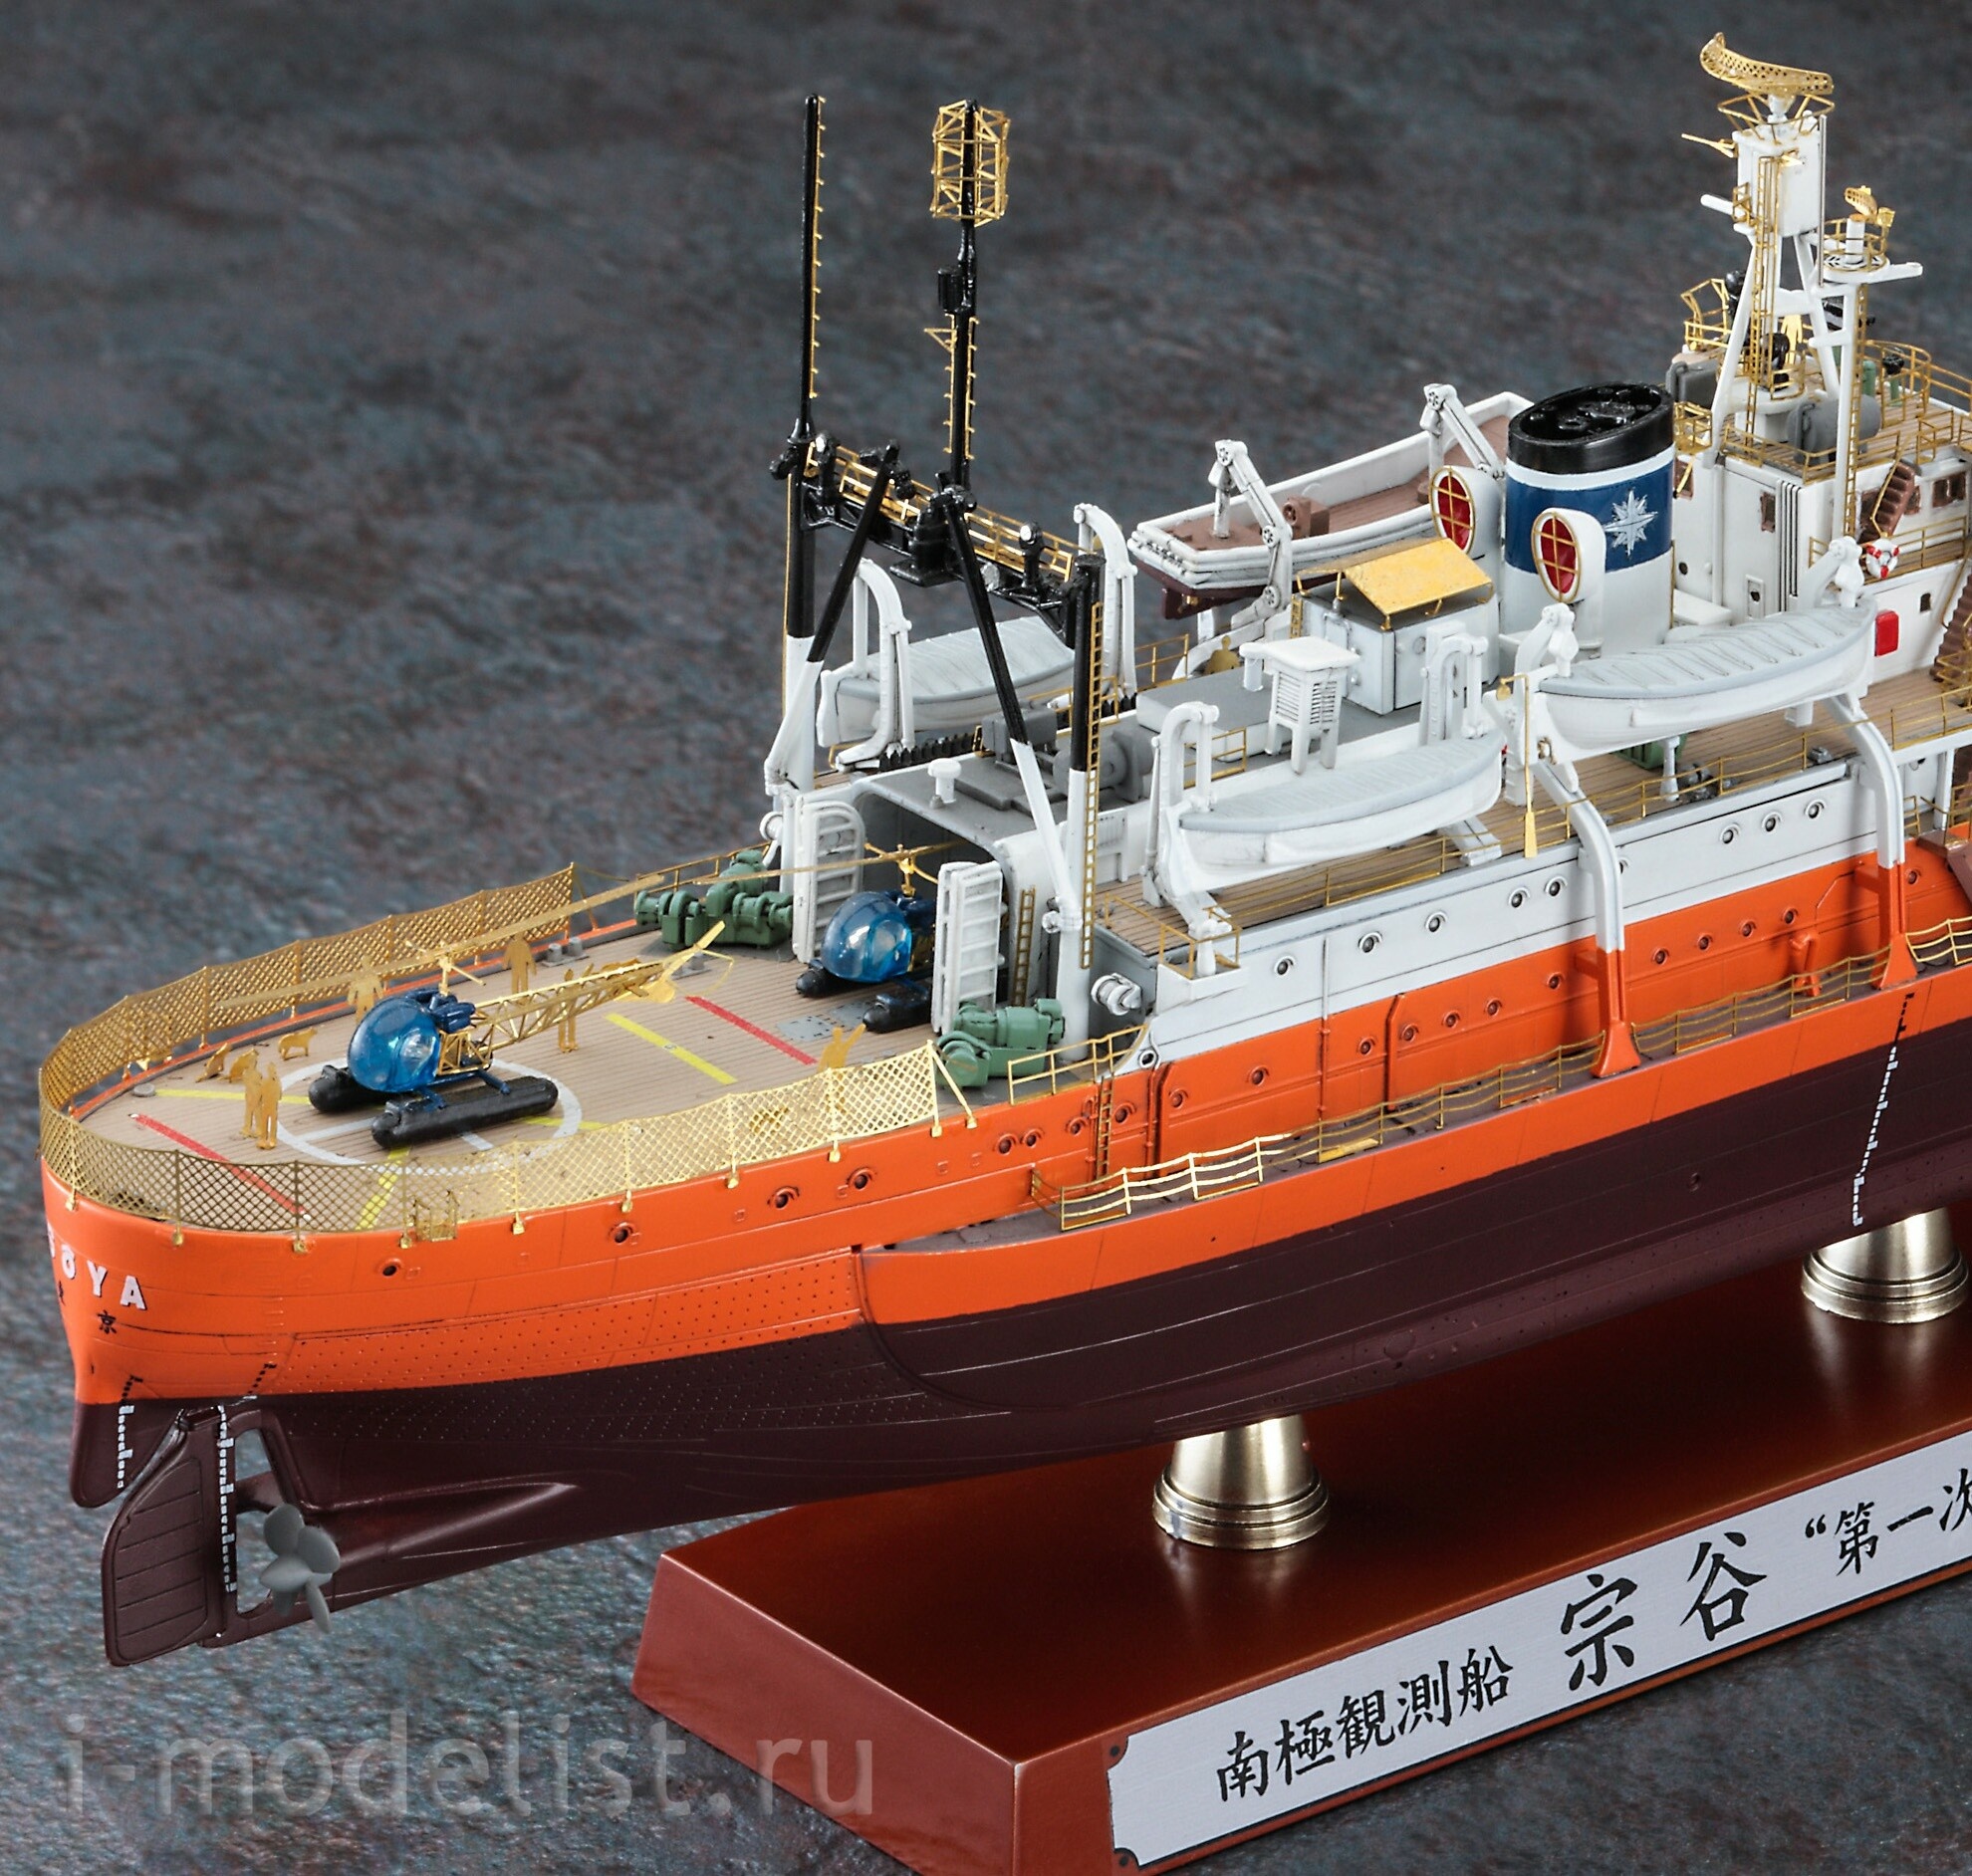 51152 Hasegawa 1/350 Научно-исследовательское судно Soya 